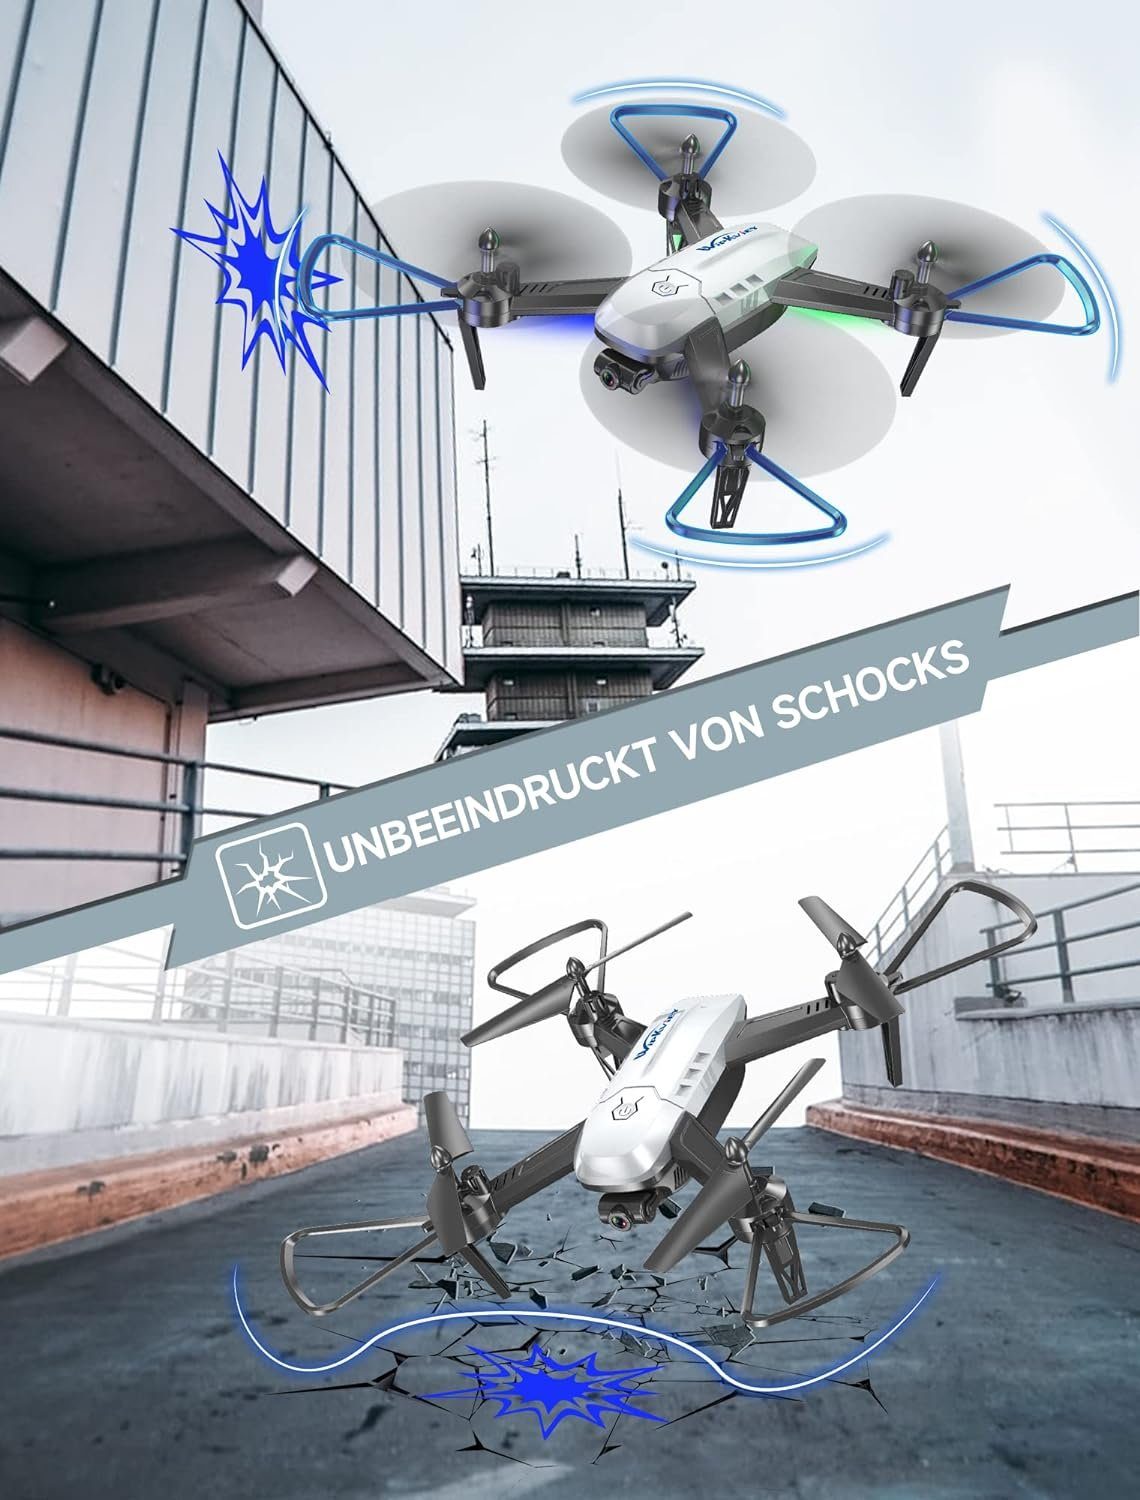 T6 Quadcopter) 1080p Kamera, Drohne Wipkviey für Drohne WiFi (1920*1080p, RC FPV HD Anfänger,